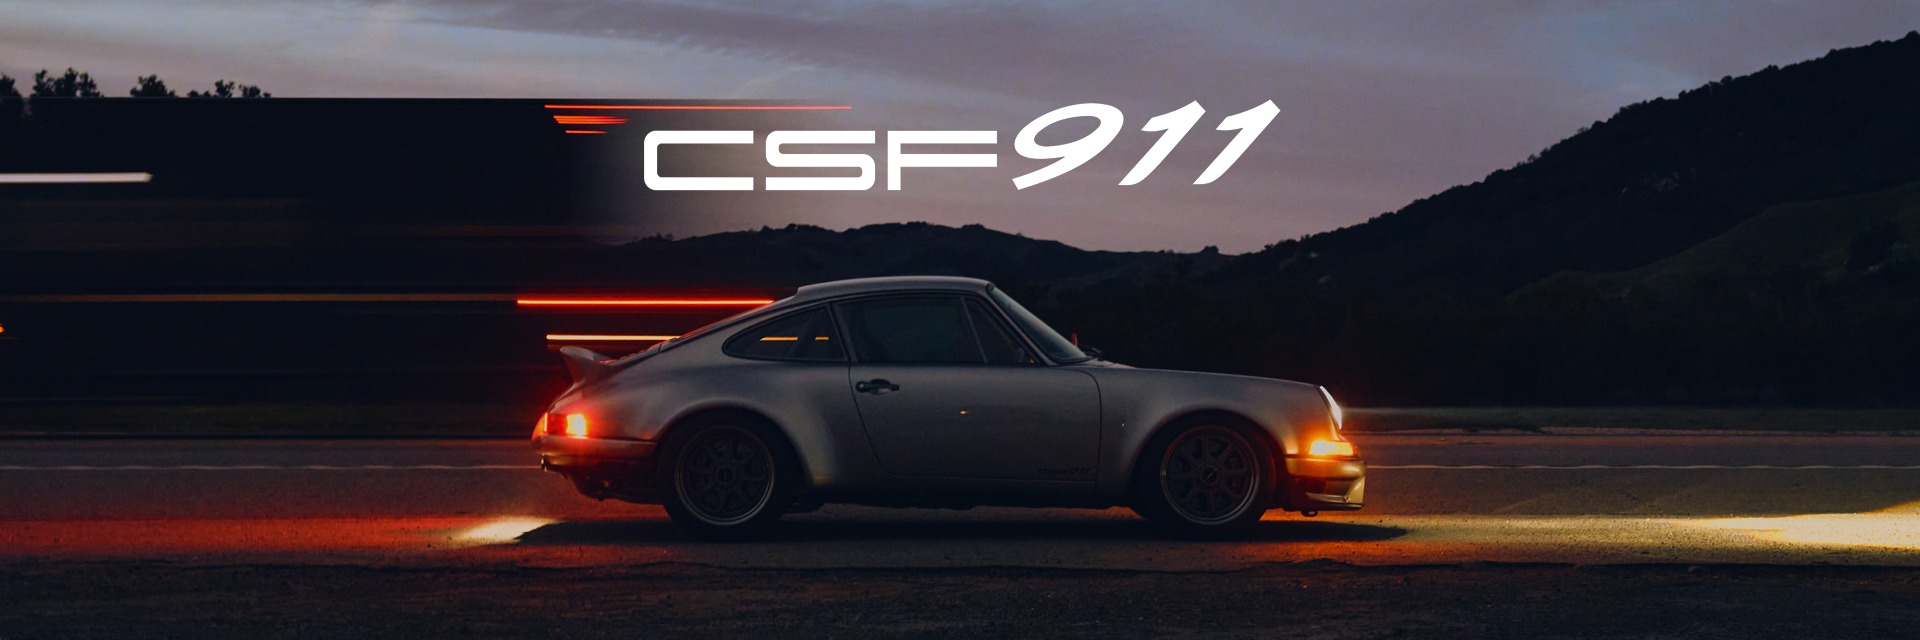 CSF 911 shoot for Type 7 Magazine